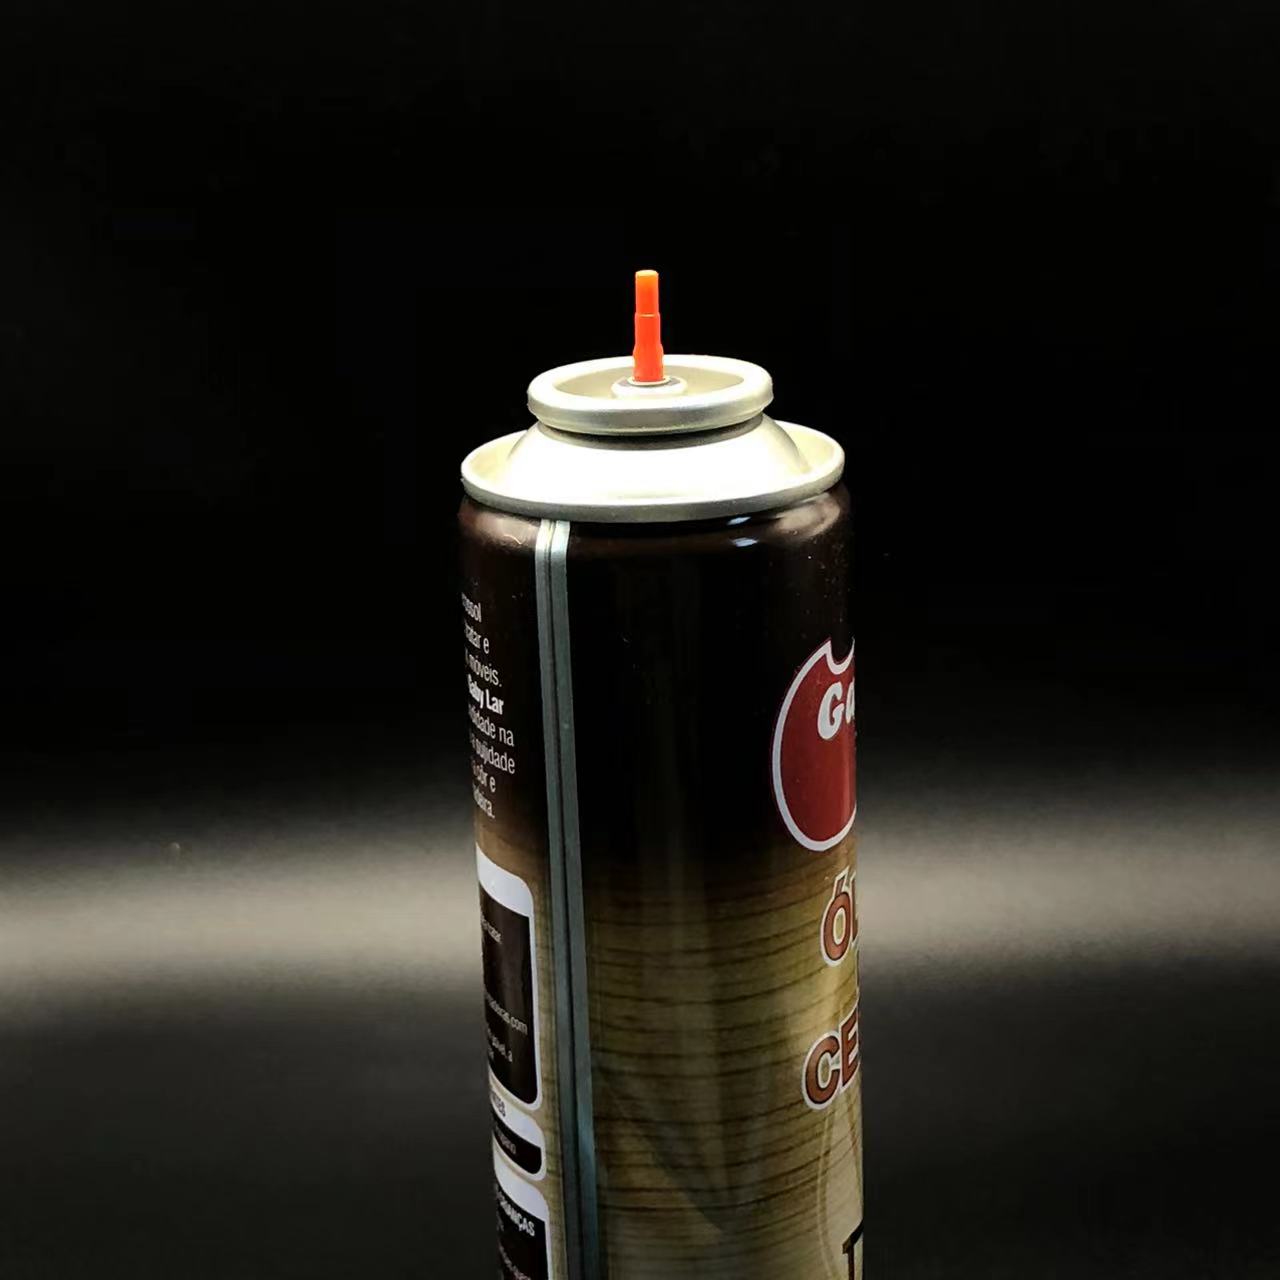 Universal Butane Gas Lighter Refill Valve Compatible sa Iba't ibang Lighter Models